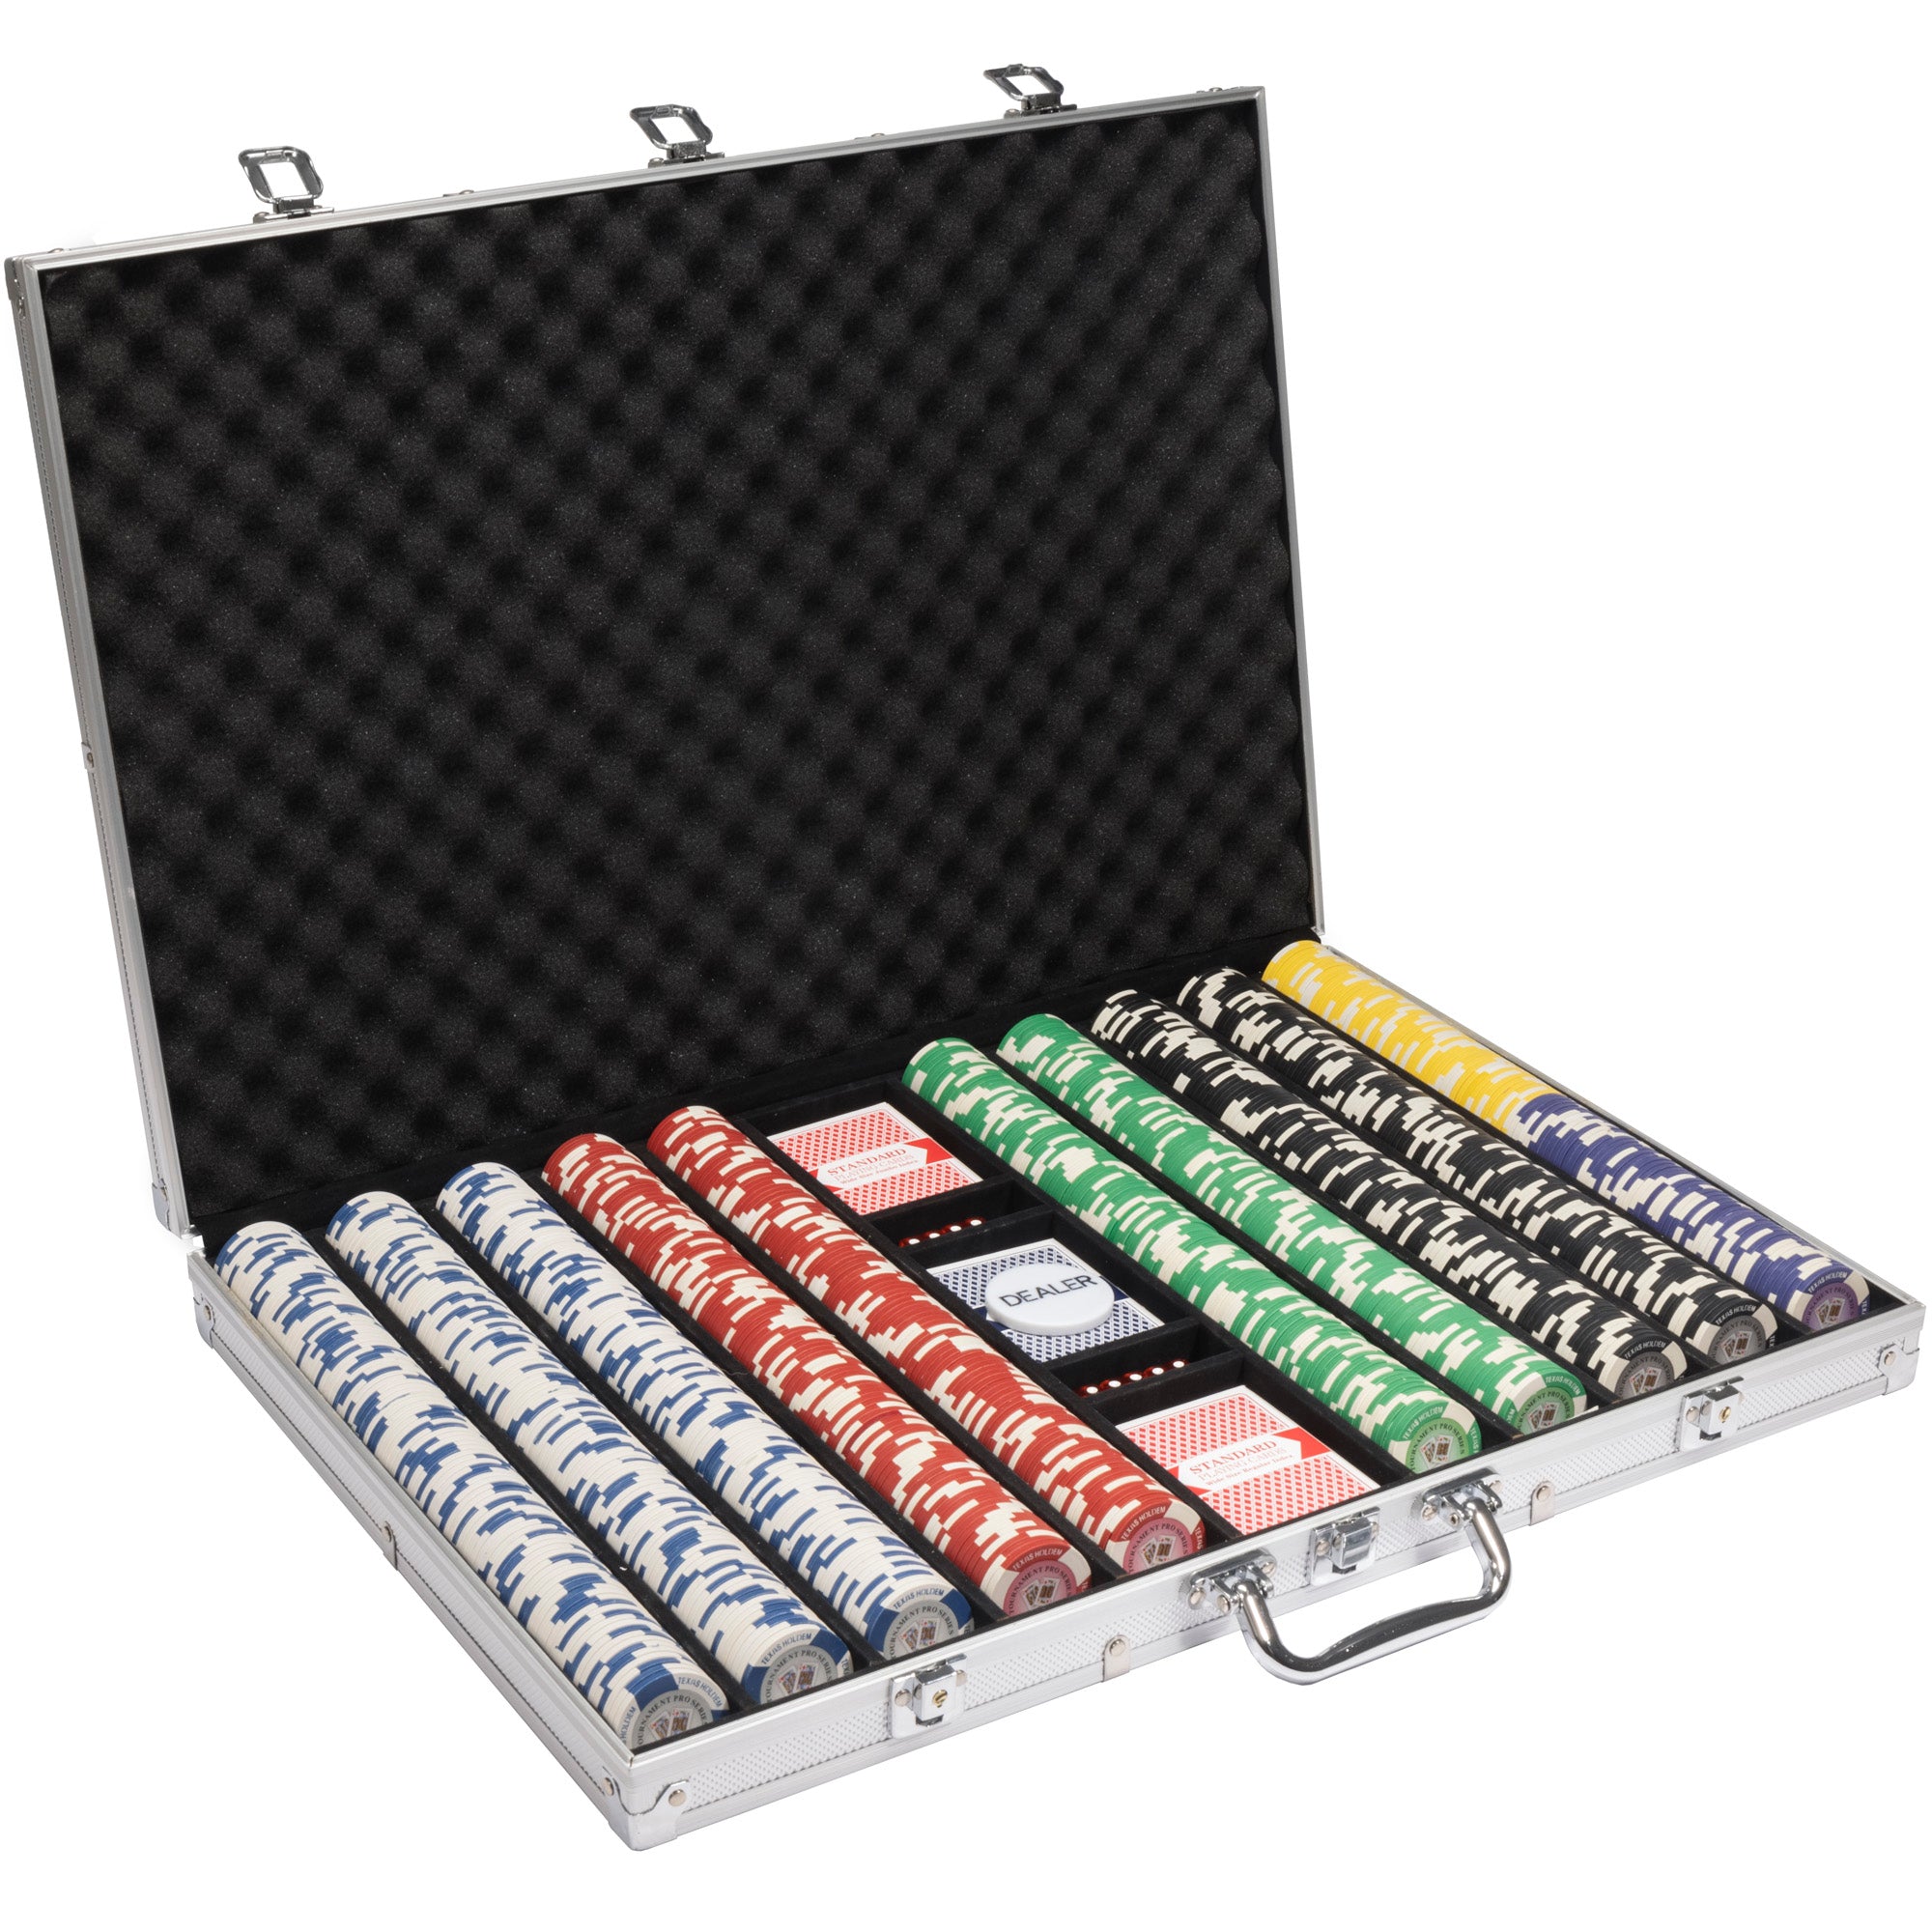 Tournament Pro 11.5-gram Poker Chip Set in Aluminum Case (1000 Count)